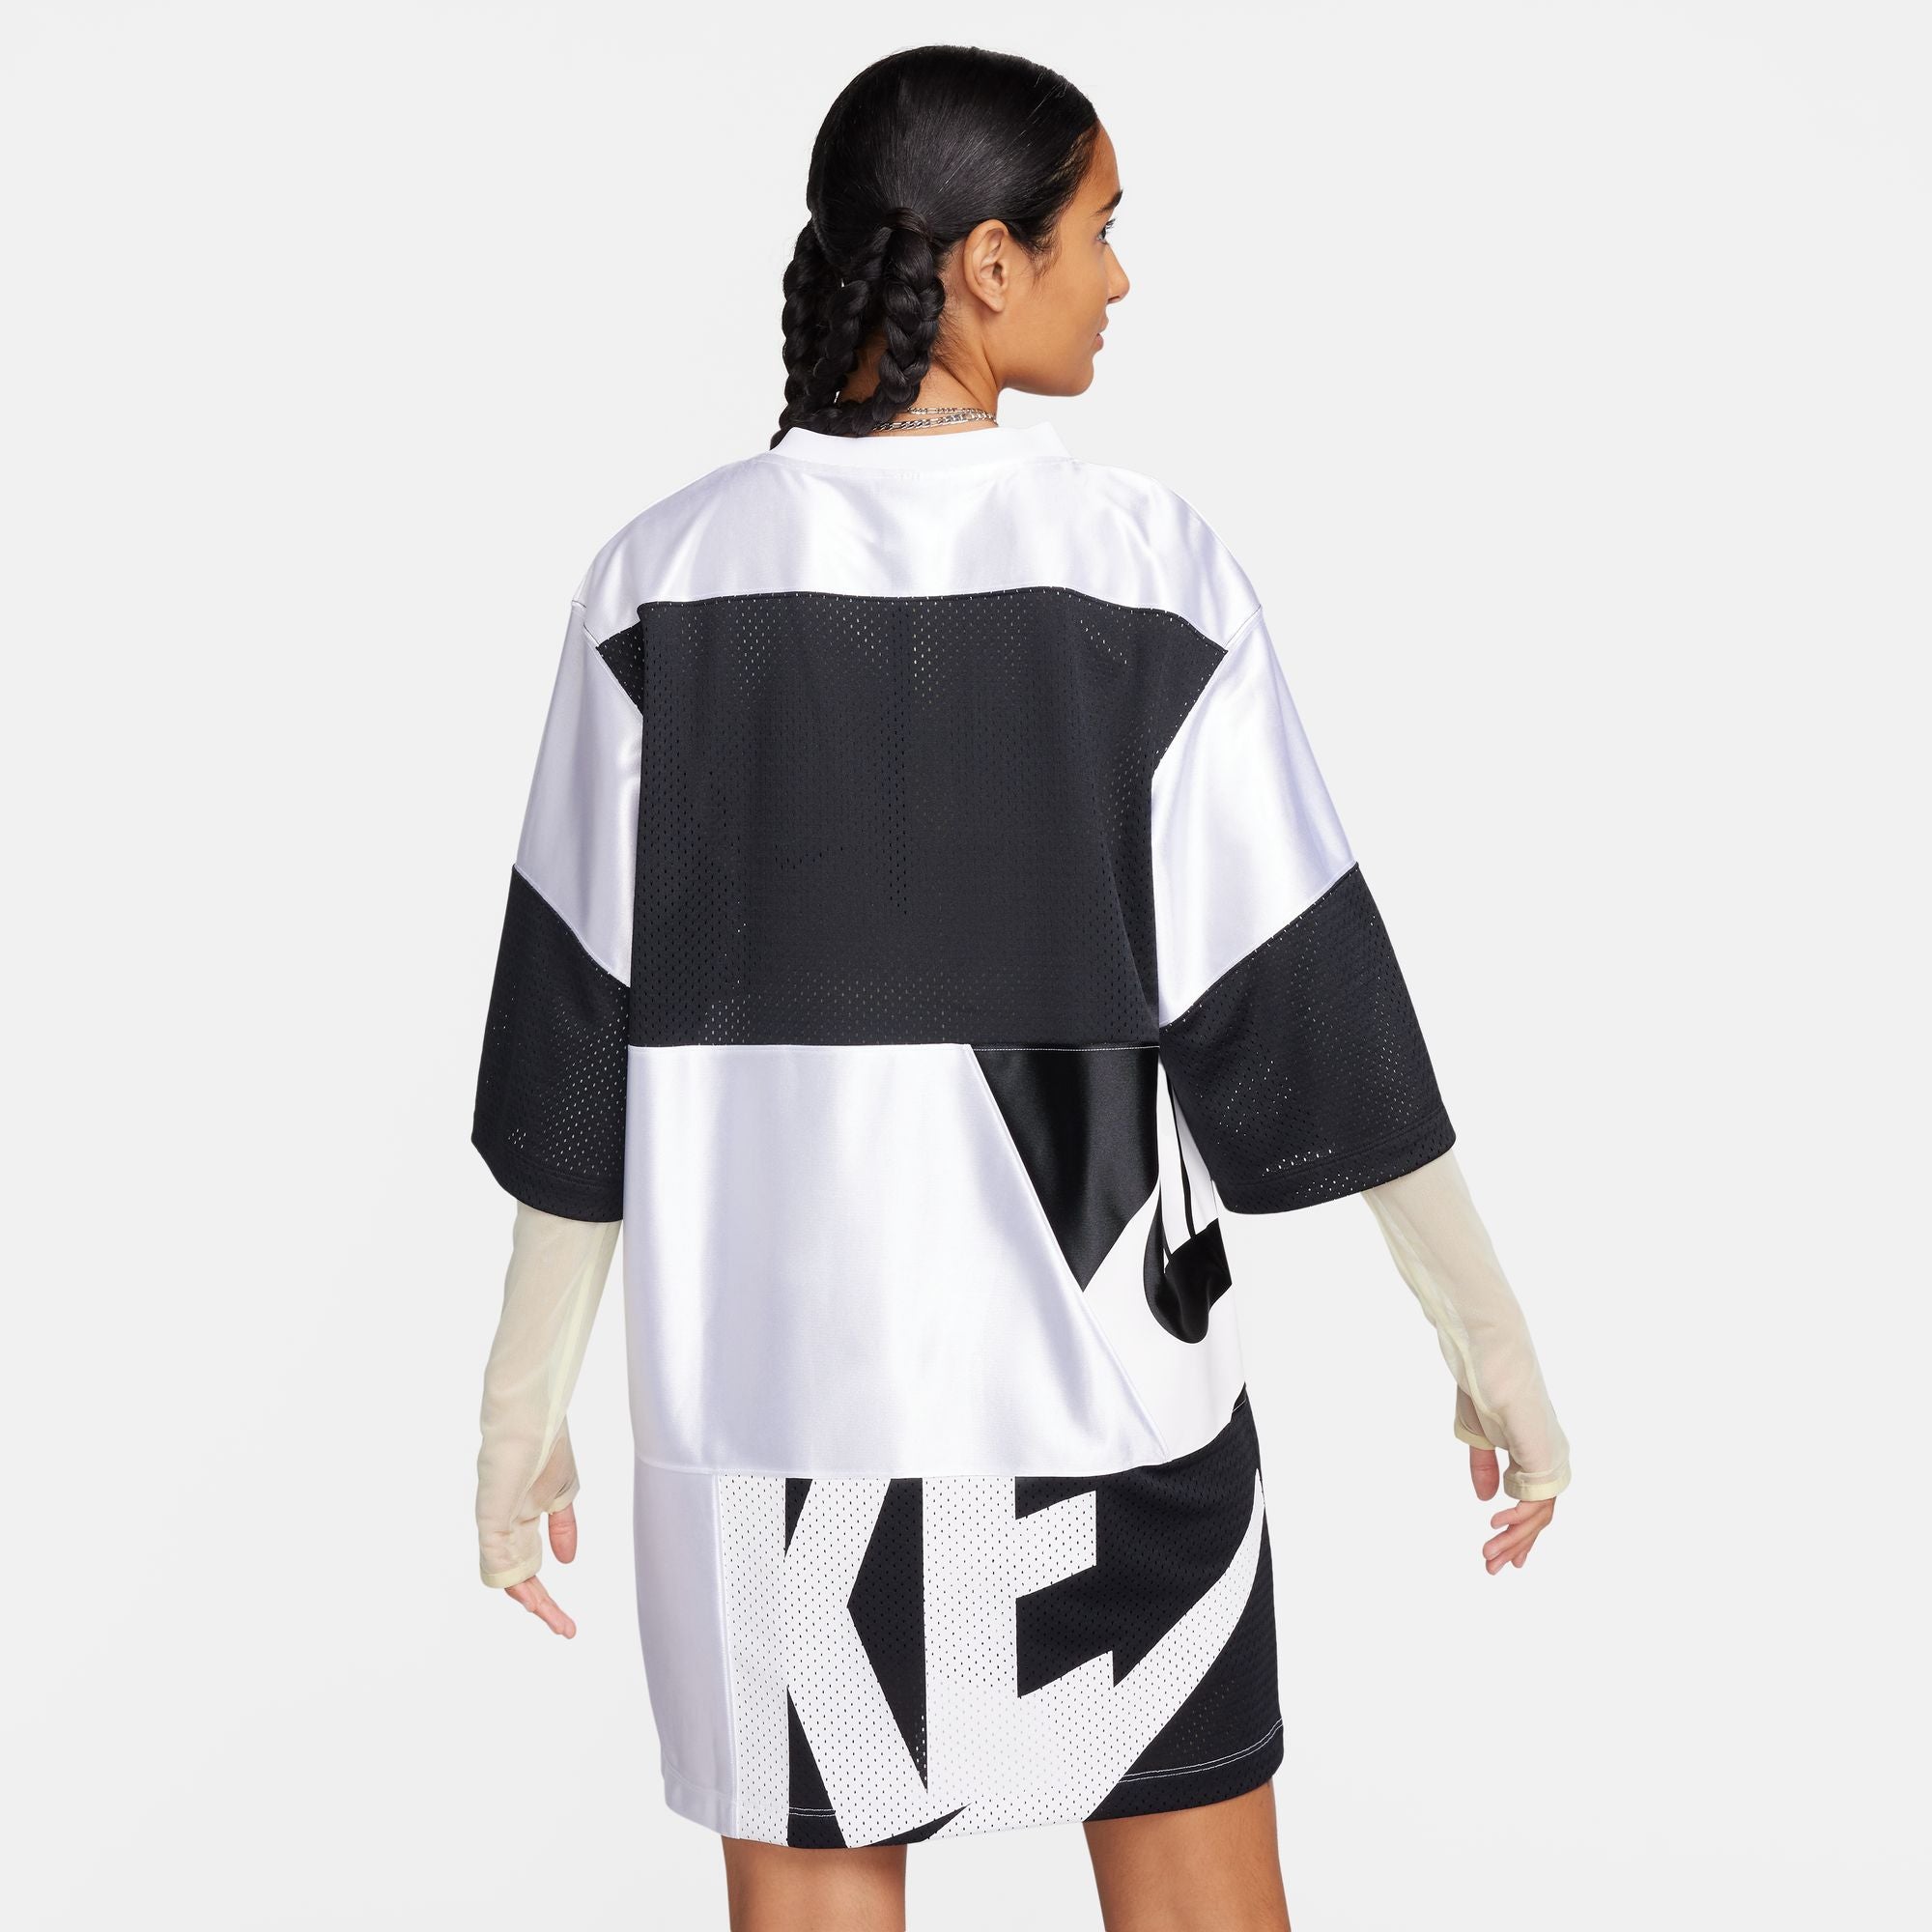 NSW JERSEY DRESS - WHITE/BLACK/WHITE